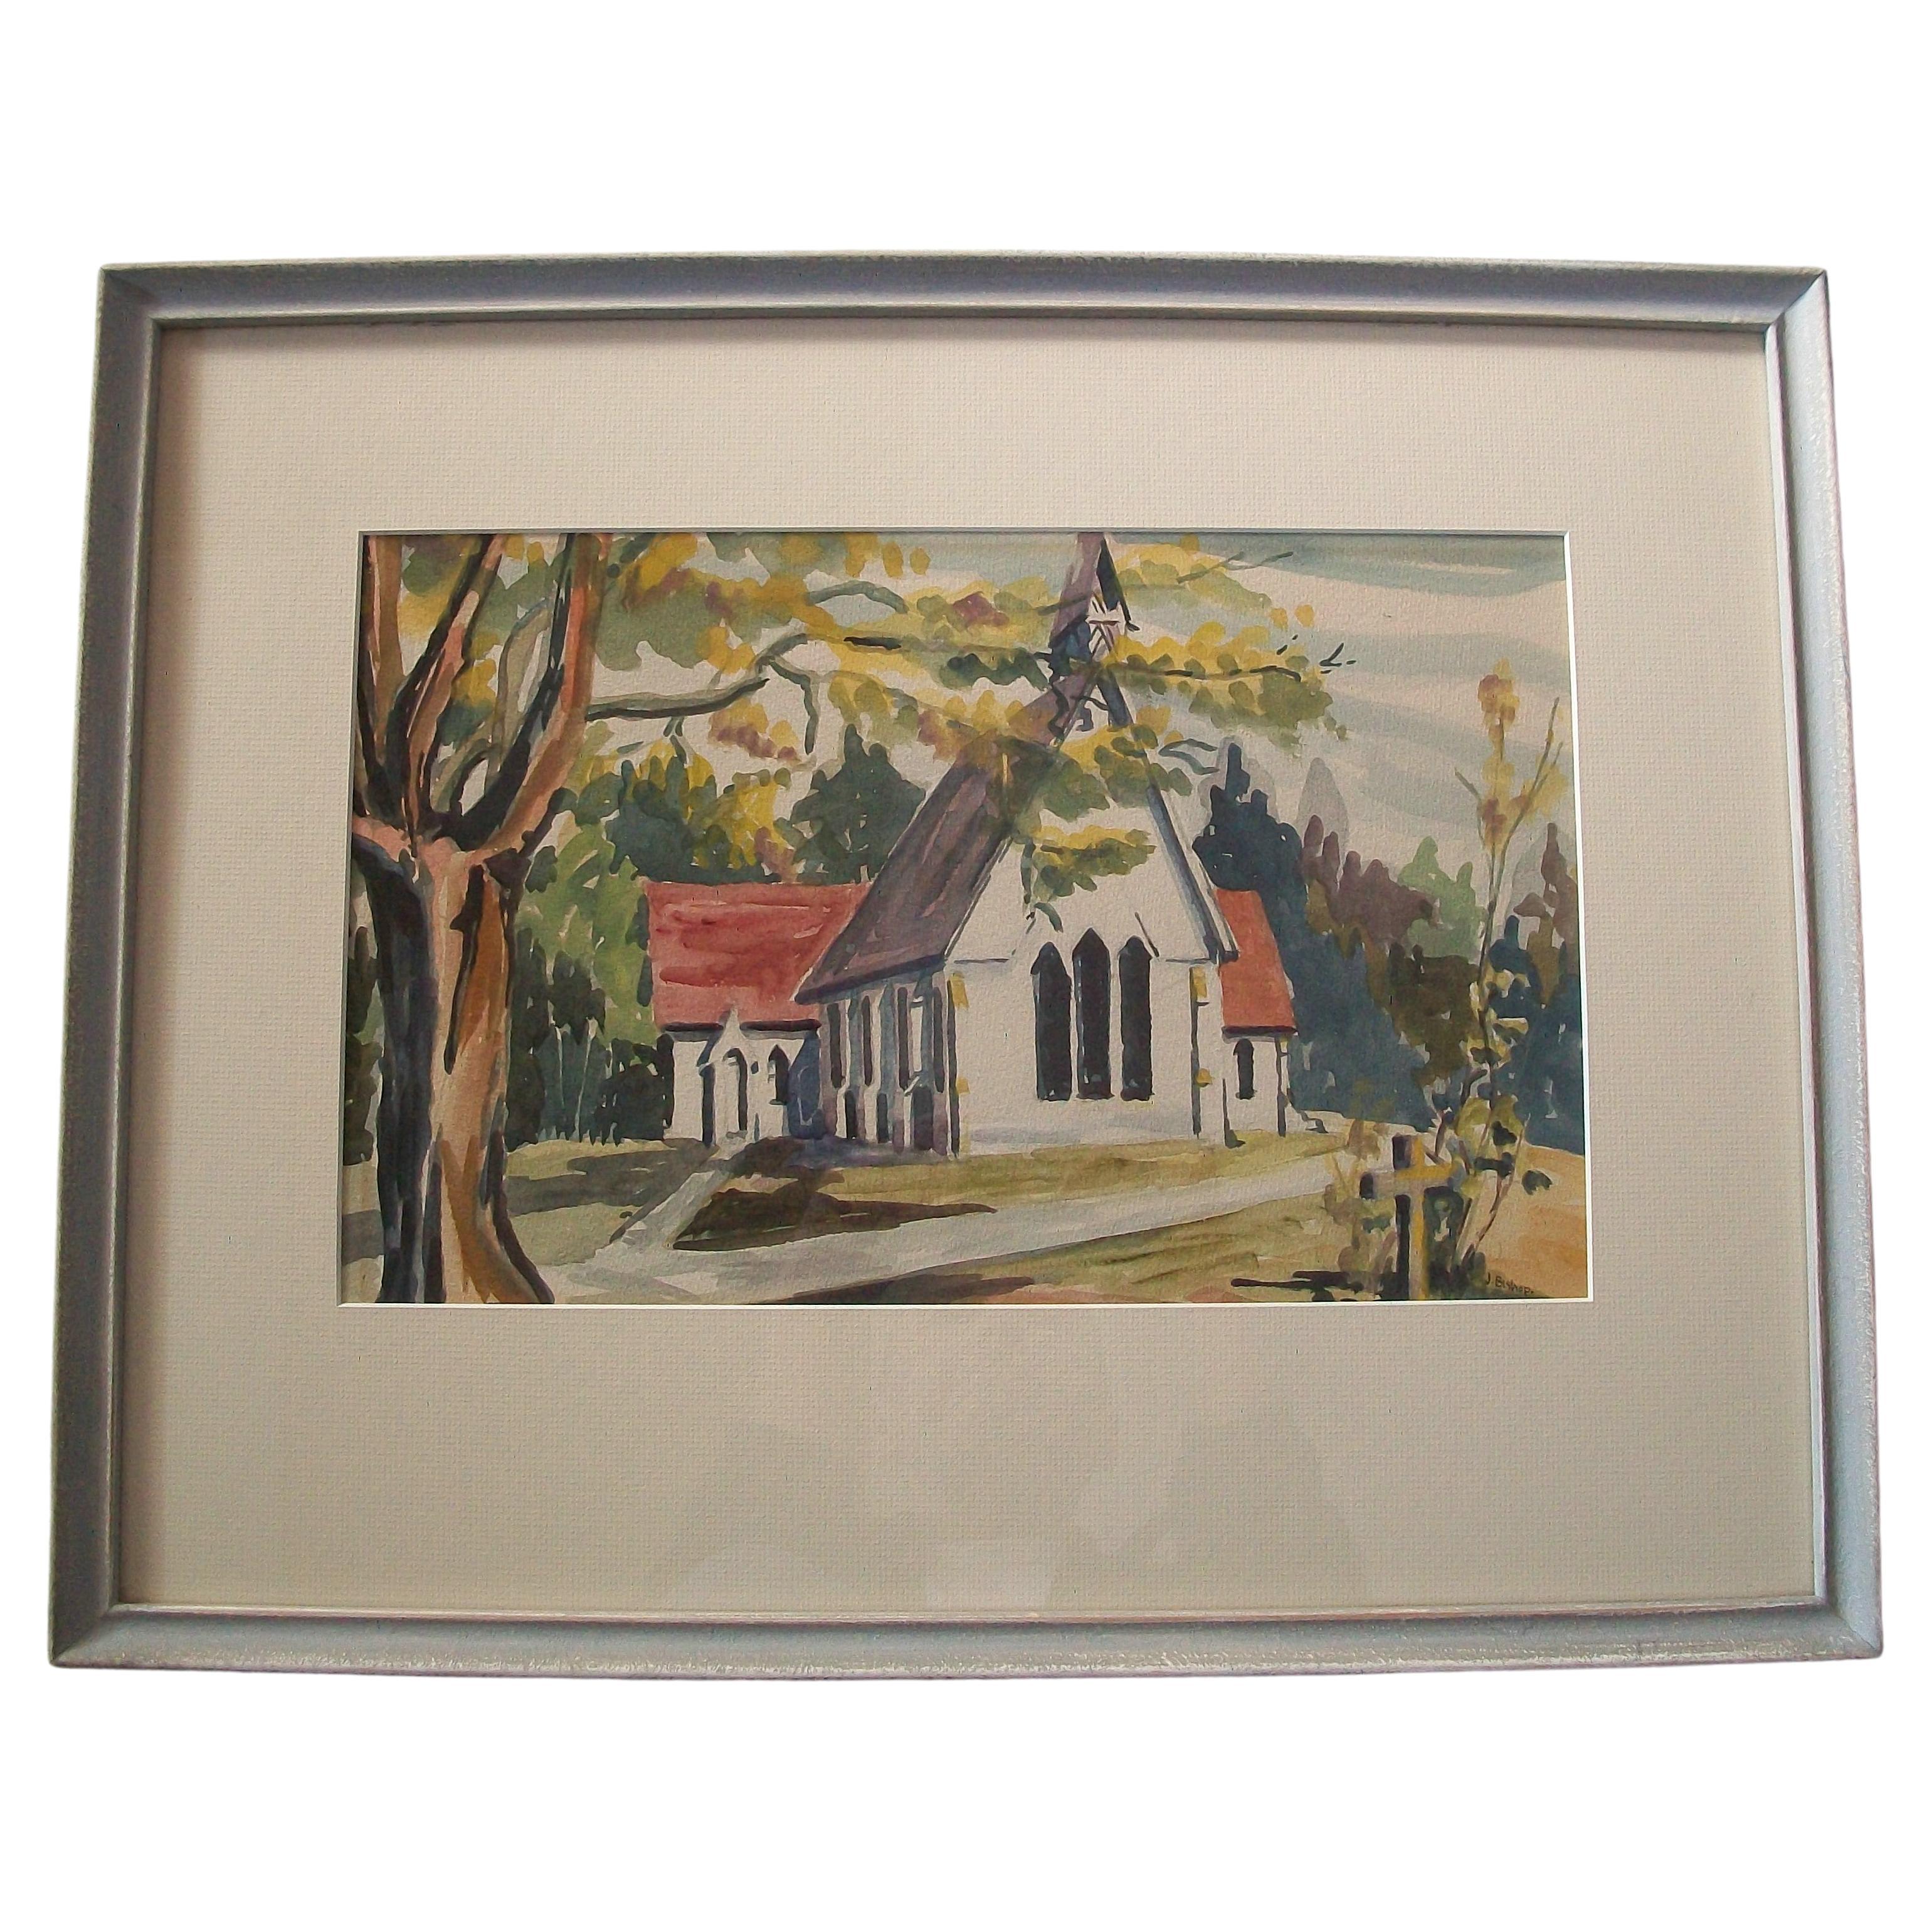 J. BISHOP - 'Untitled' - Vintage Watercolor Painting - Framed - Canada - 20th C.